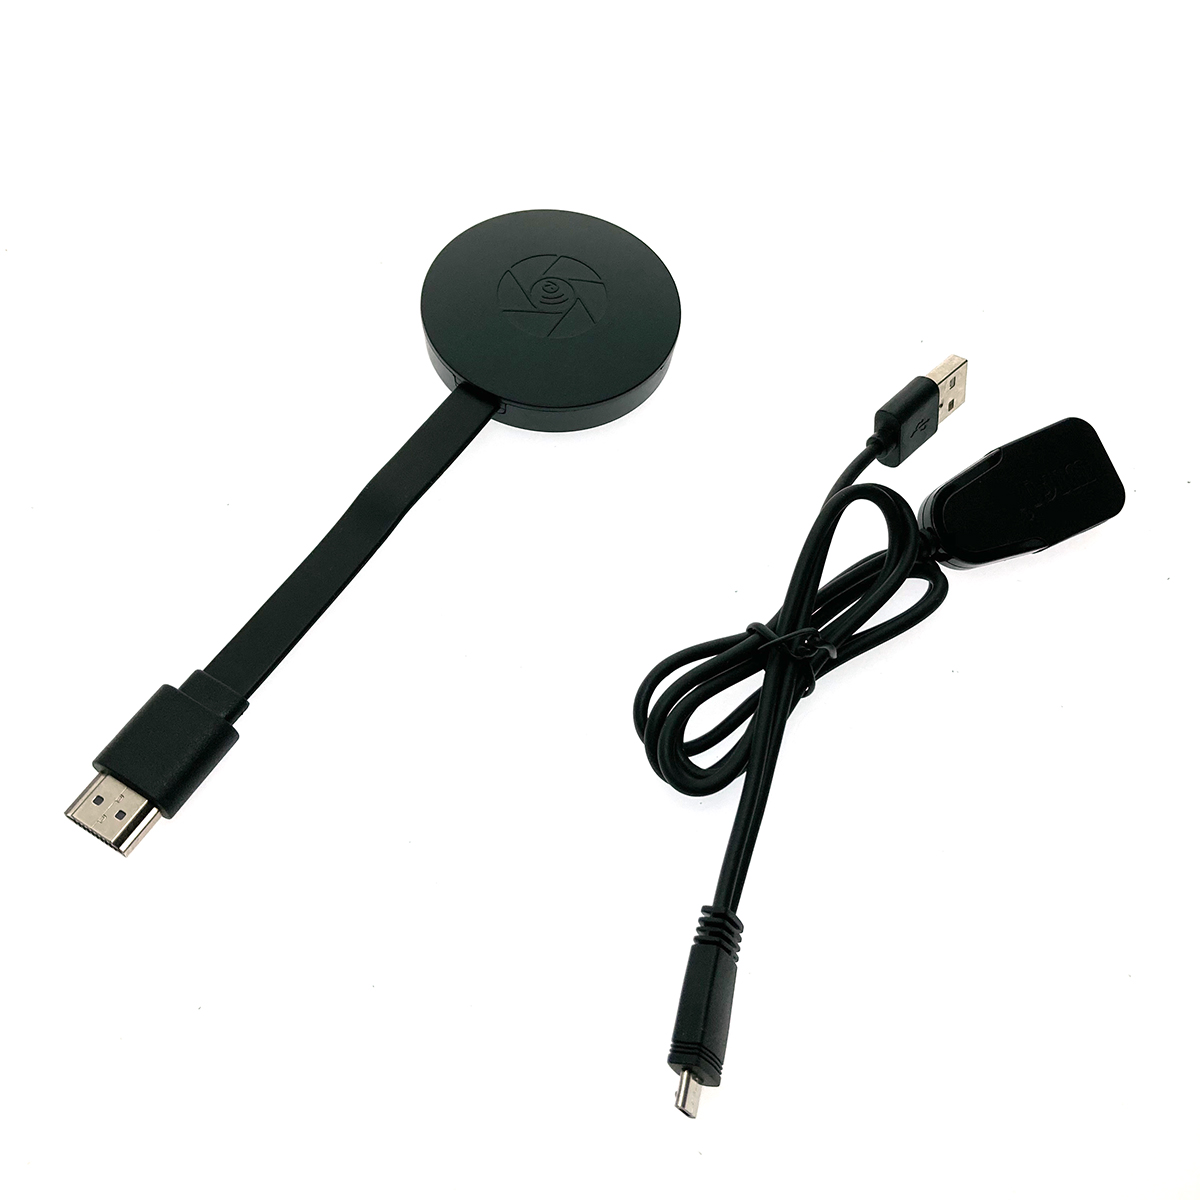 Адаптер WiFi HDMI WV04 для телевизора, монитора чипсет AM8268 / поддержка Android, iOS /